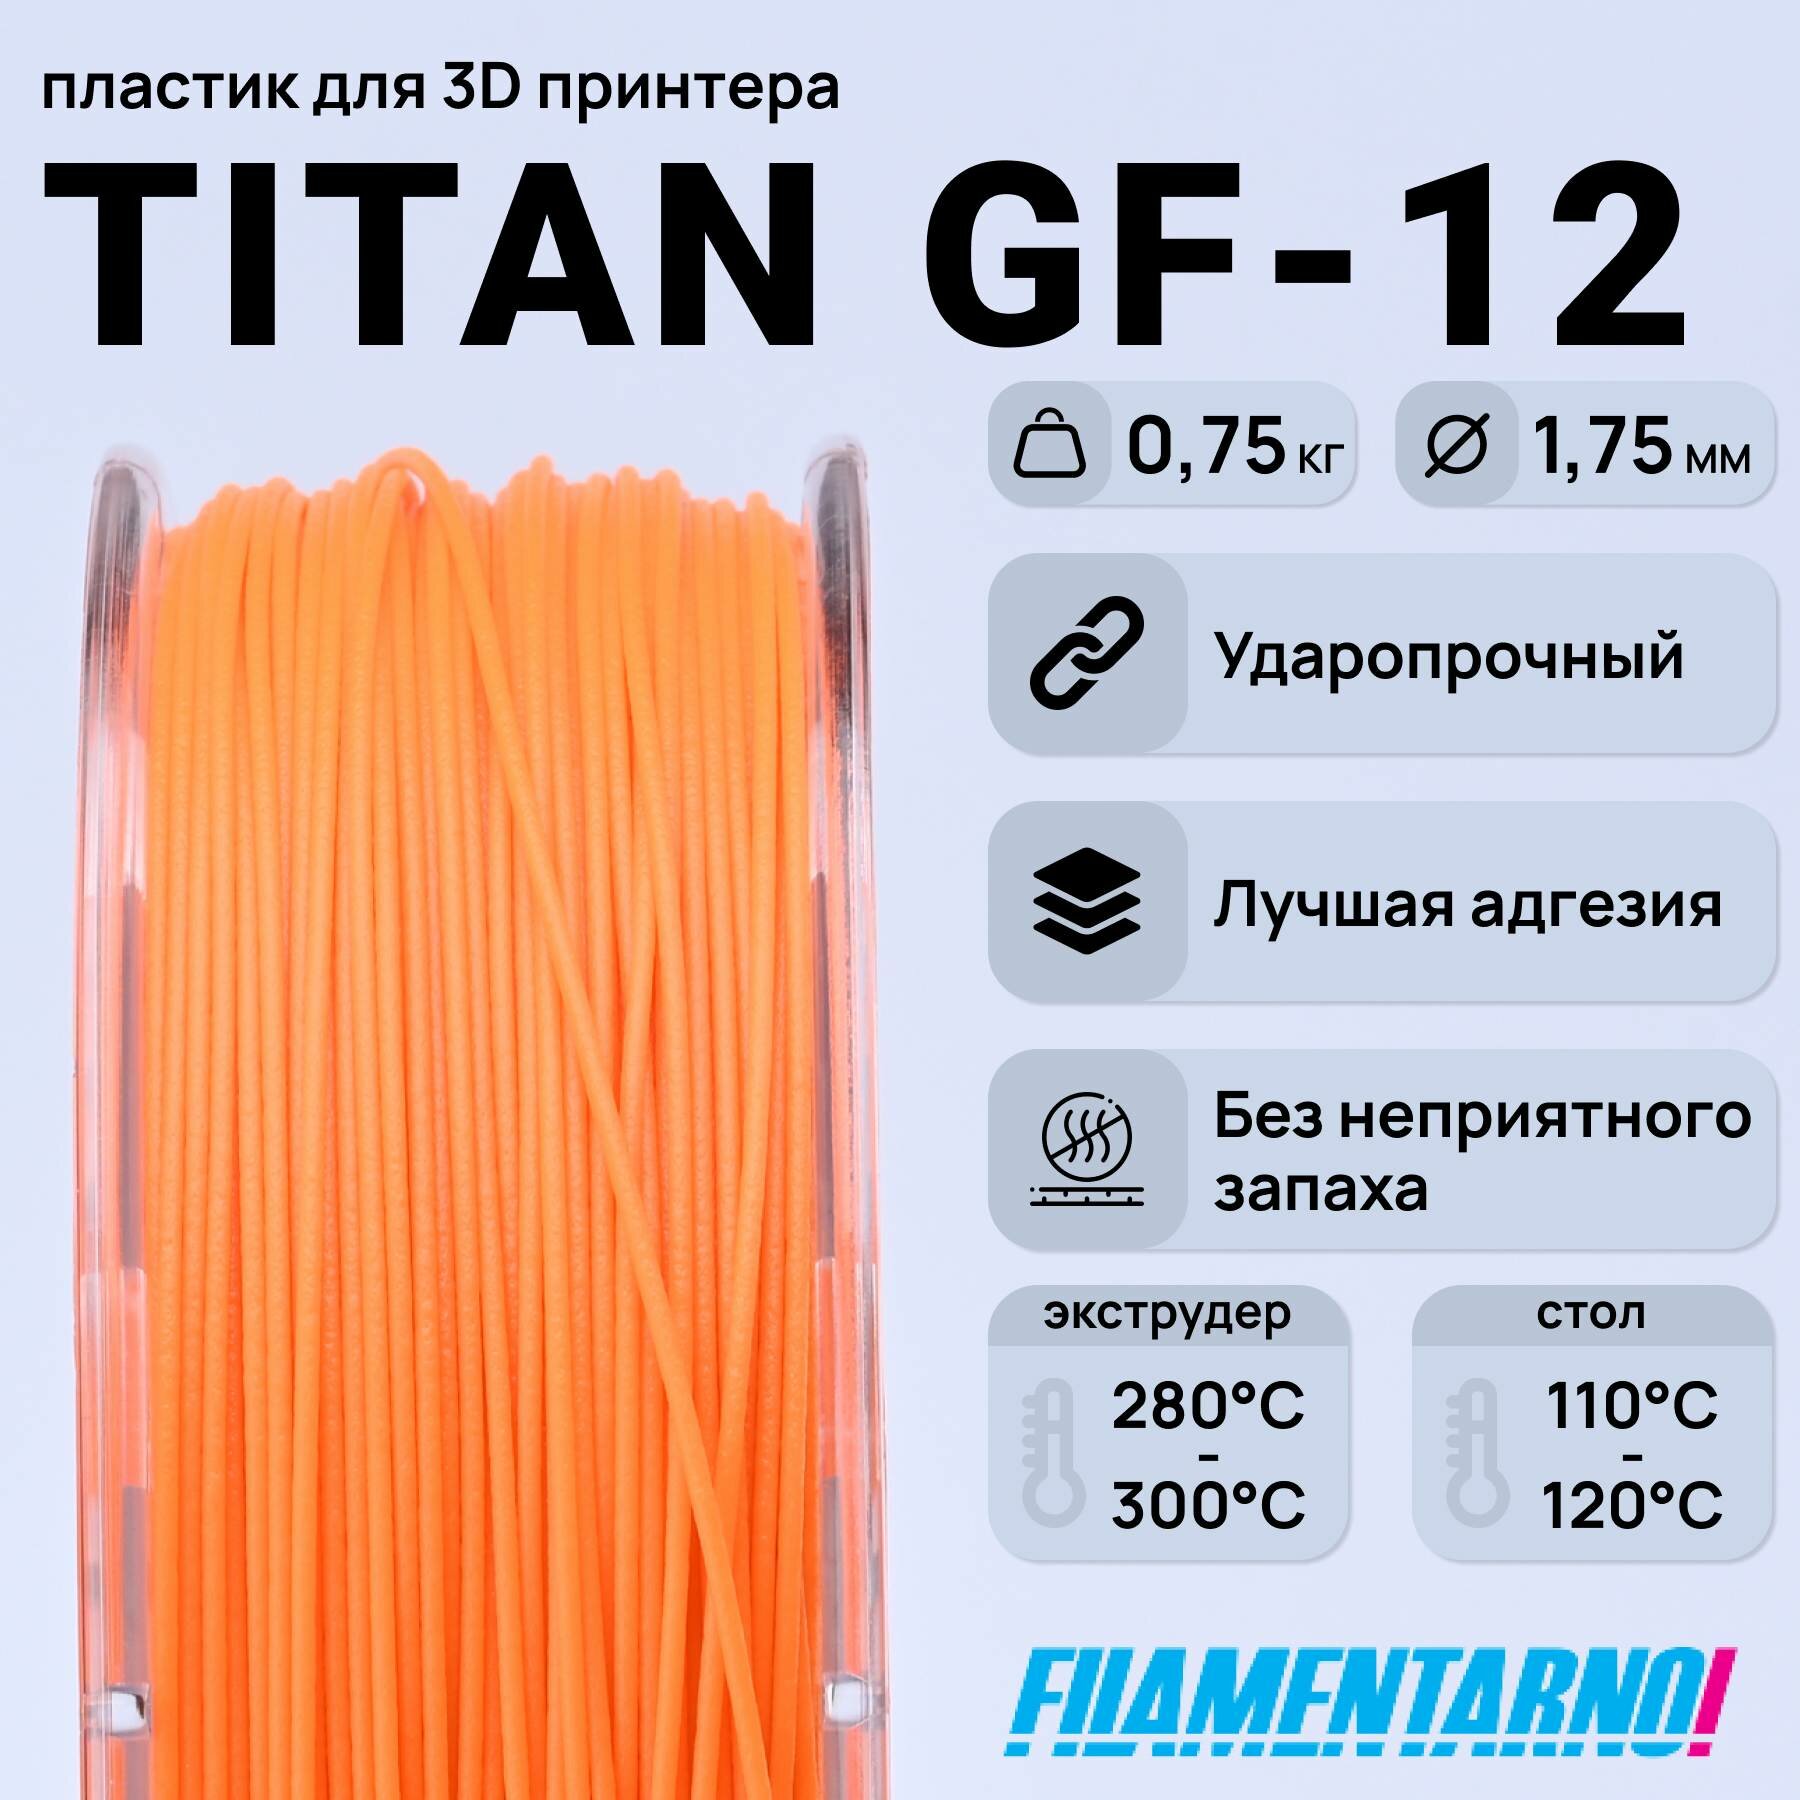 ABS Titan GF-12 оранжевый 750 г, 1,75 мм, пластик Filamentarno для 3D-принтера